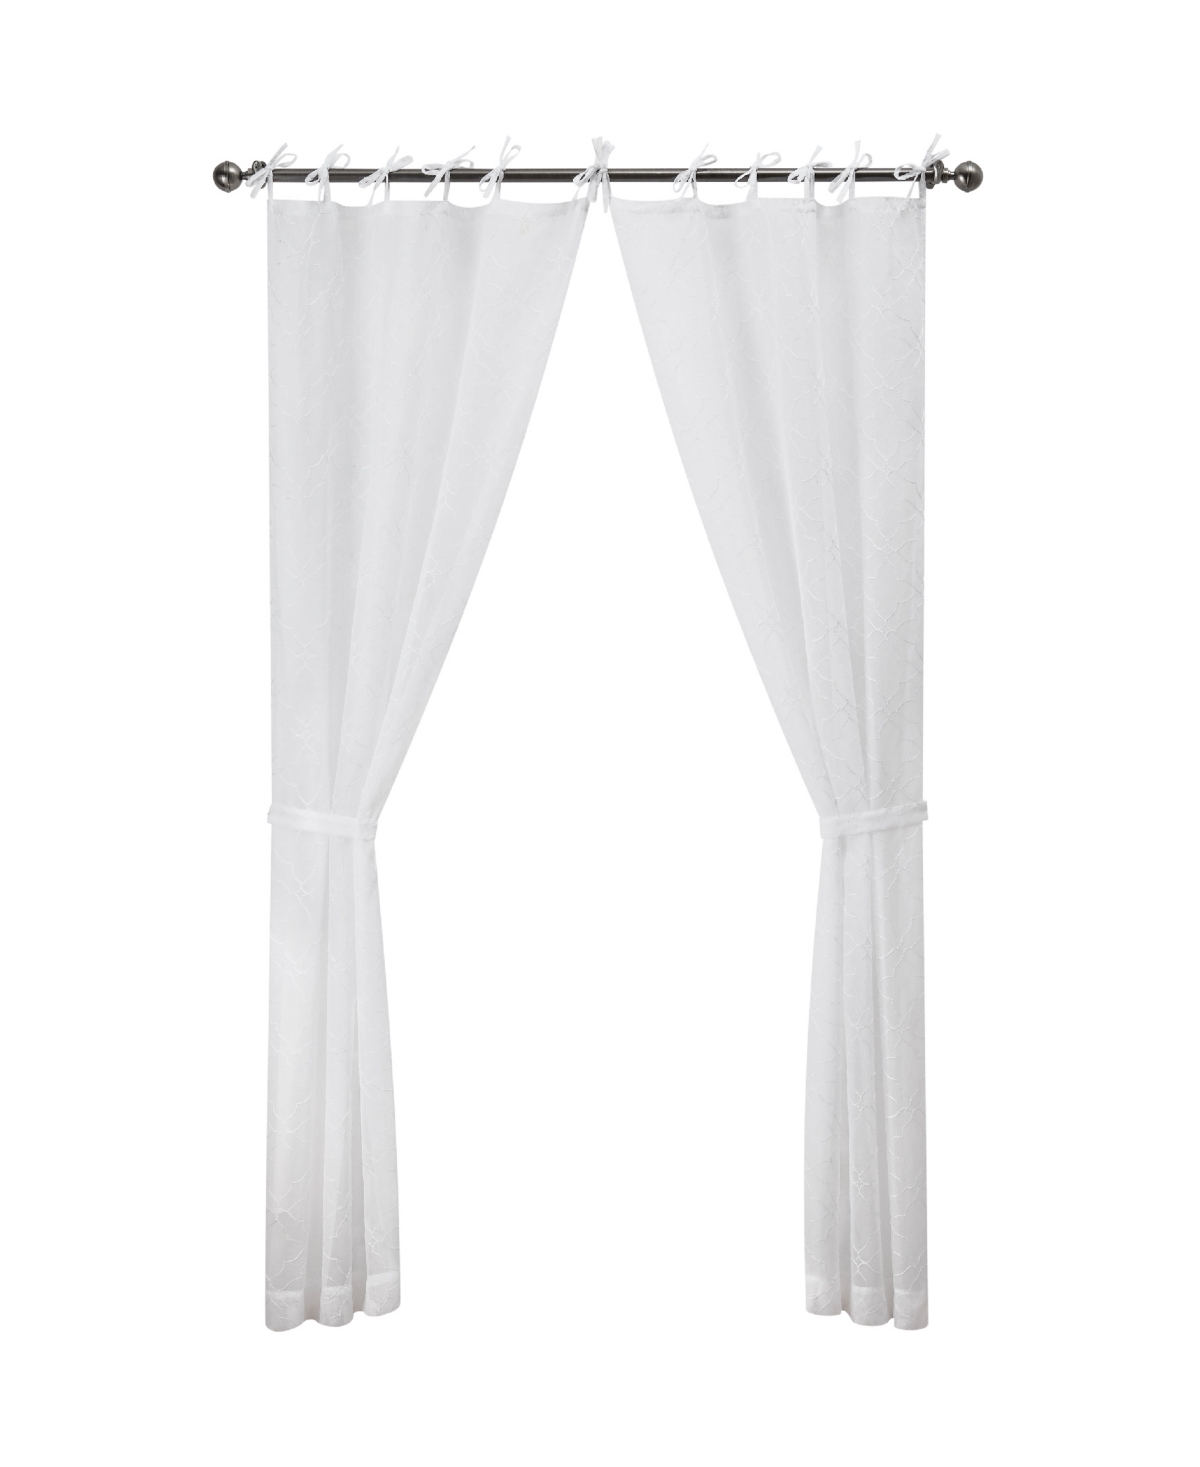 Nora Embroidery Sheer Tie Top Window Curtain Panel Pair with Tiebacks, 38" x 96" - White